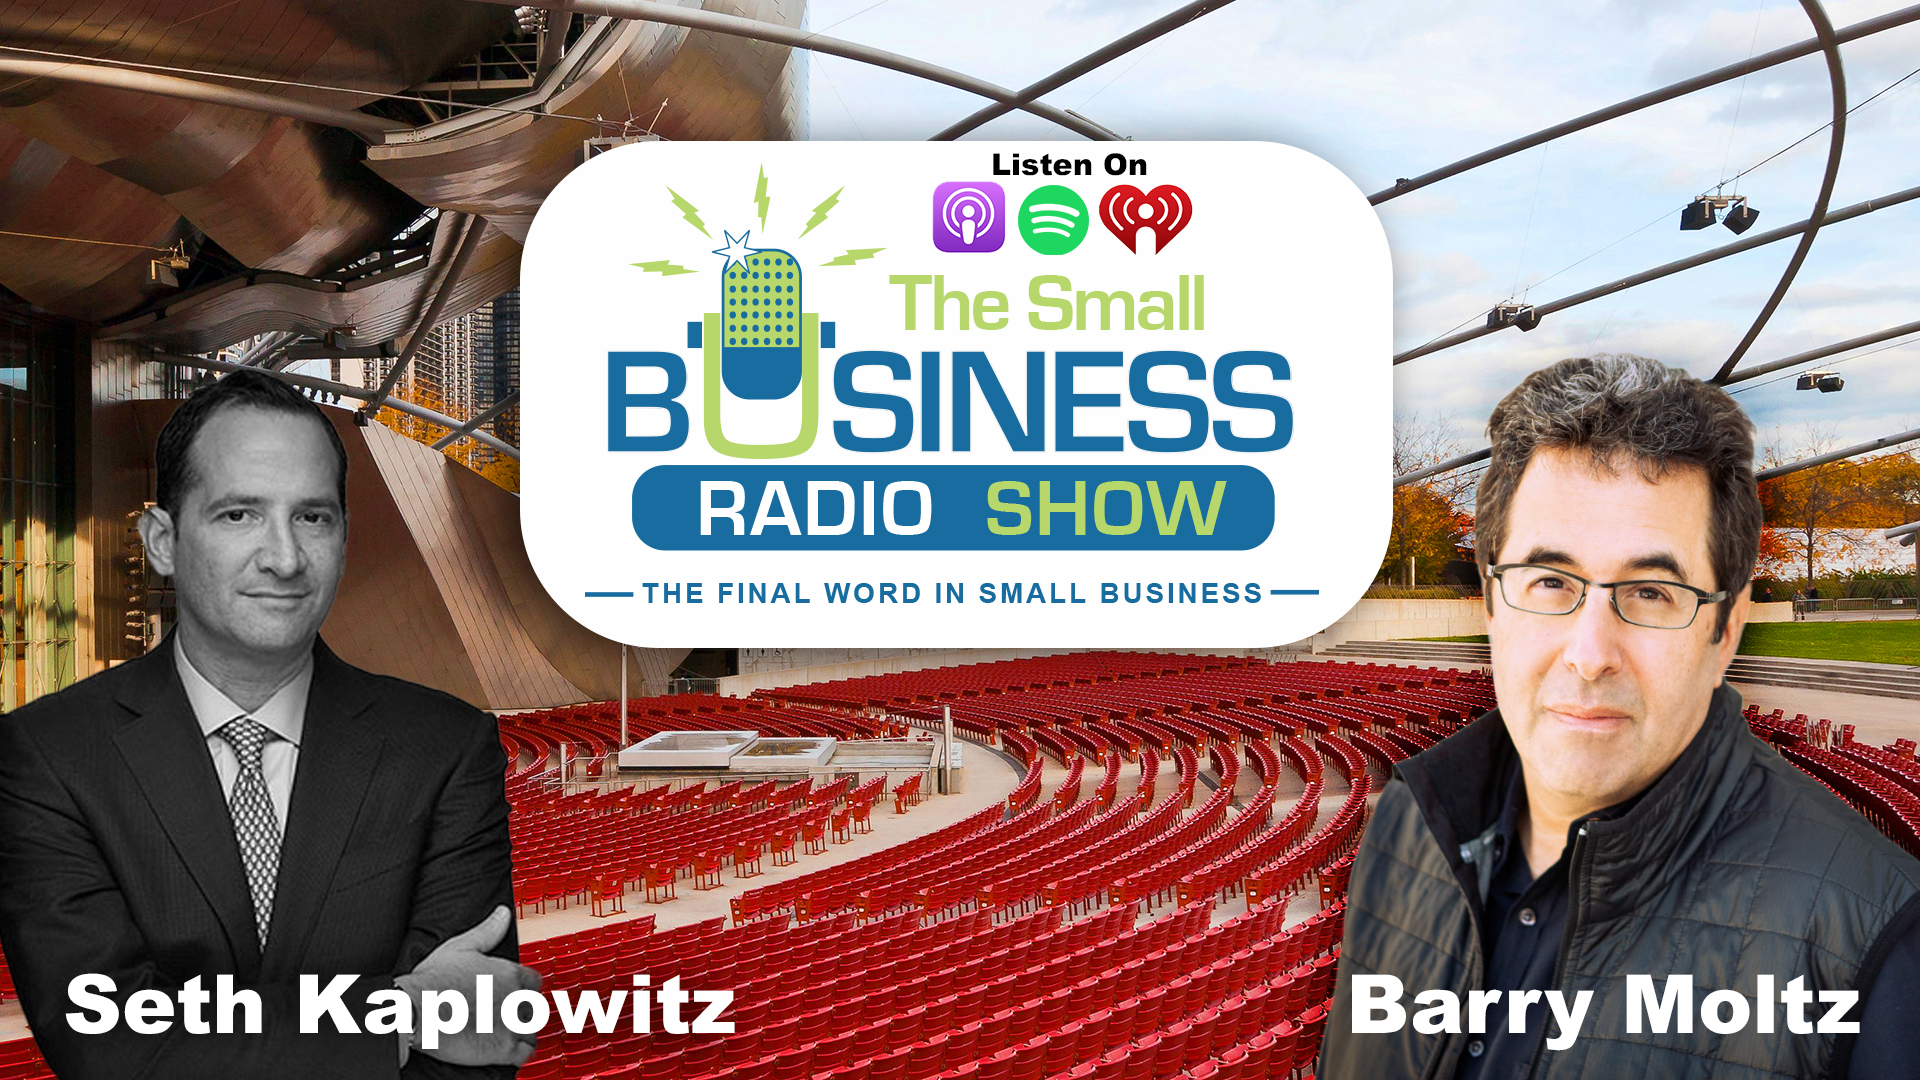 Seth Kaplowitz on The Small Business Radio Show longevity plan